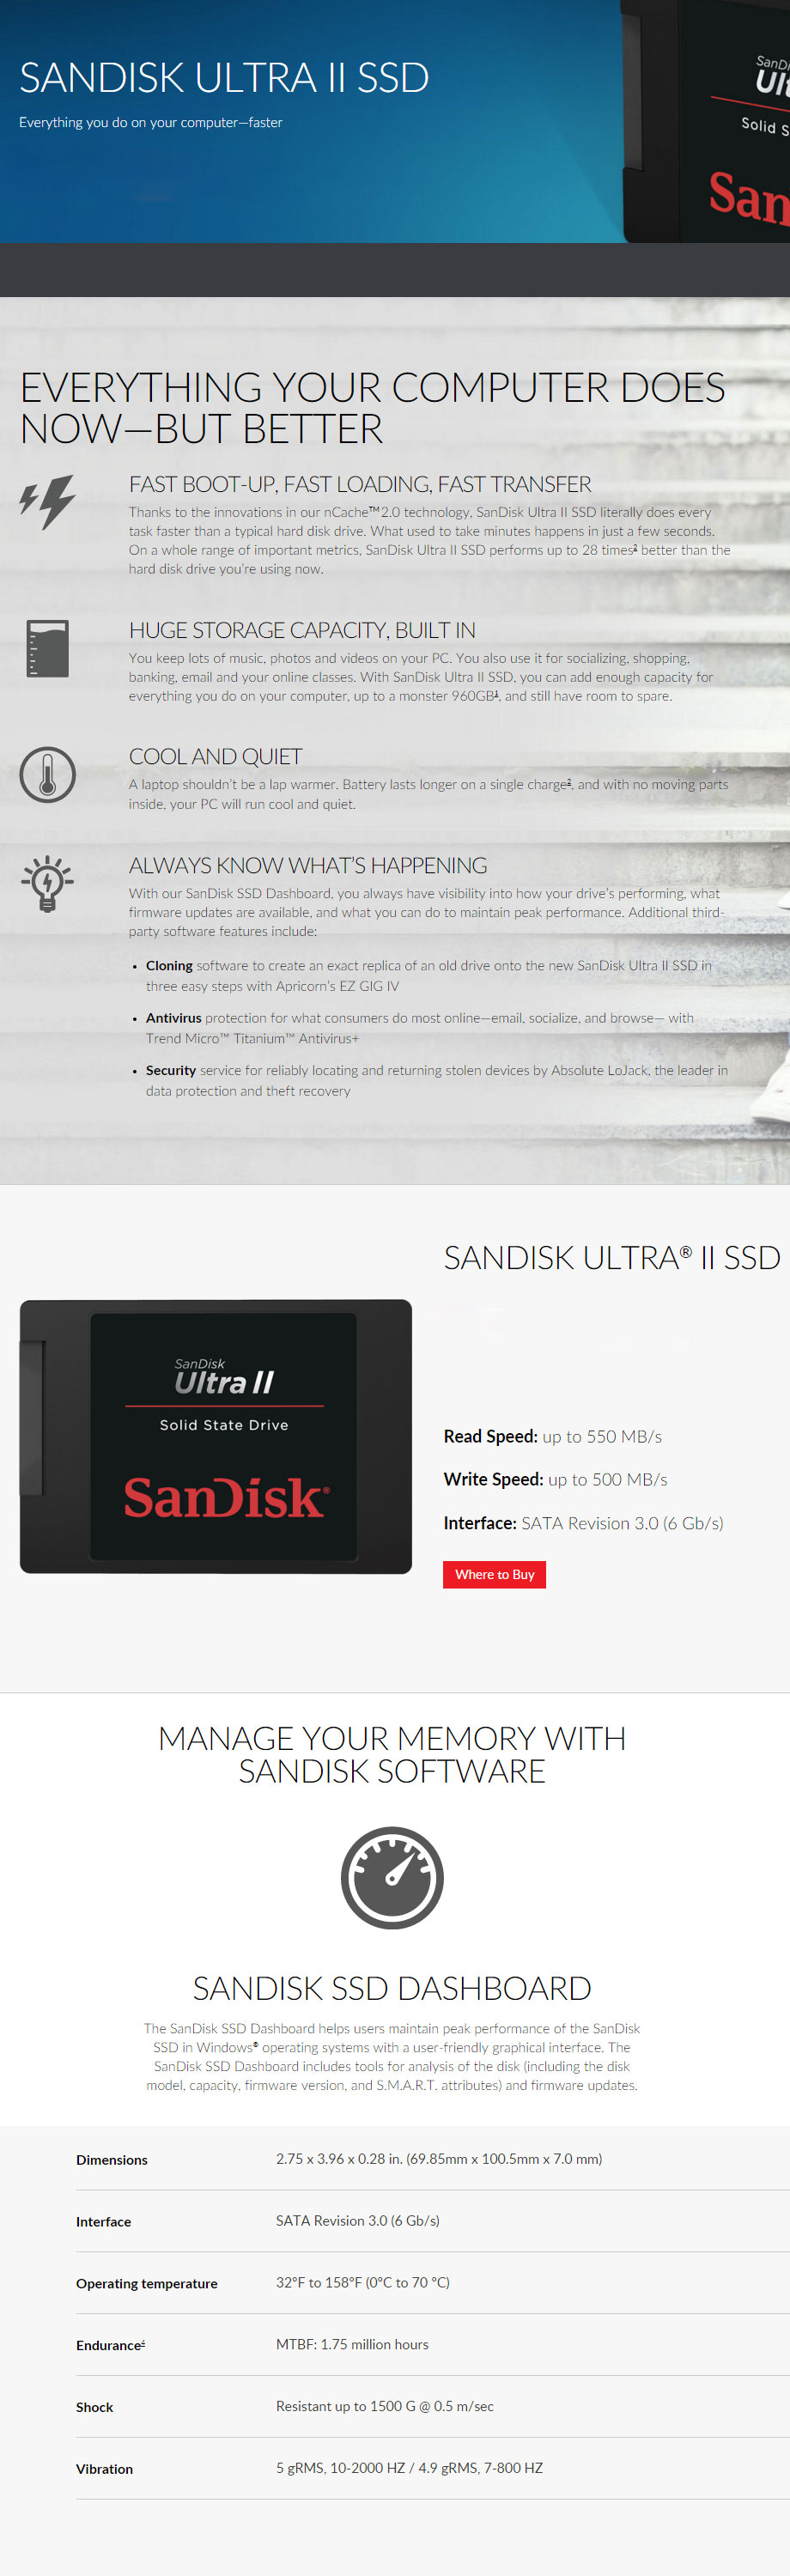 Ultra II Sandisk